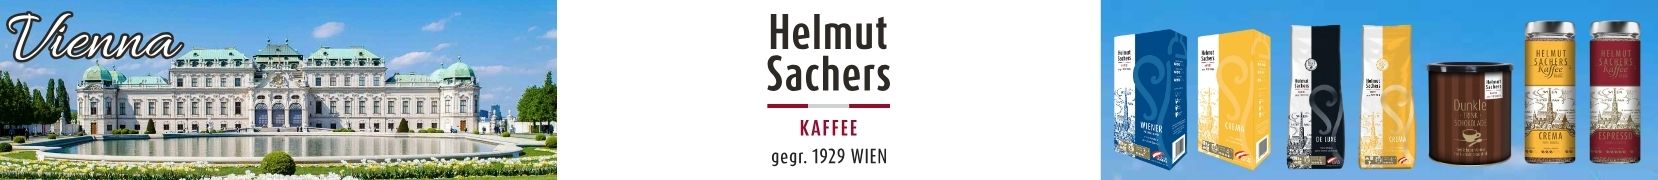 Helmut Sachers Coffee